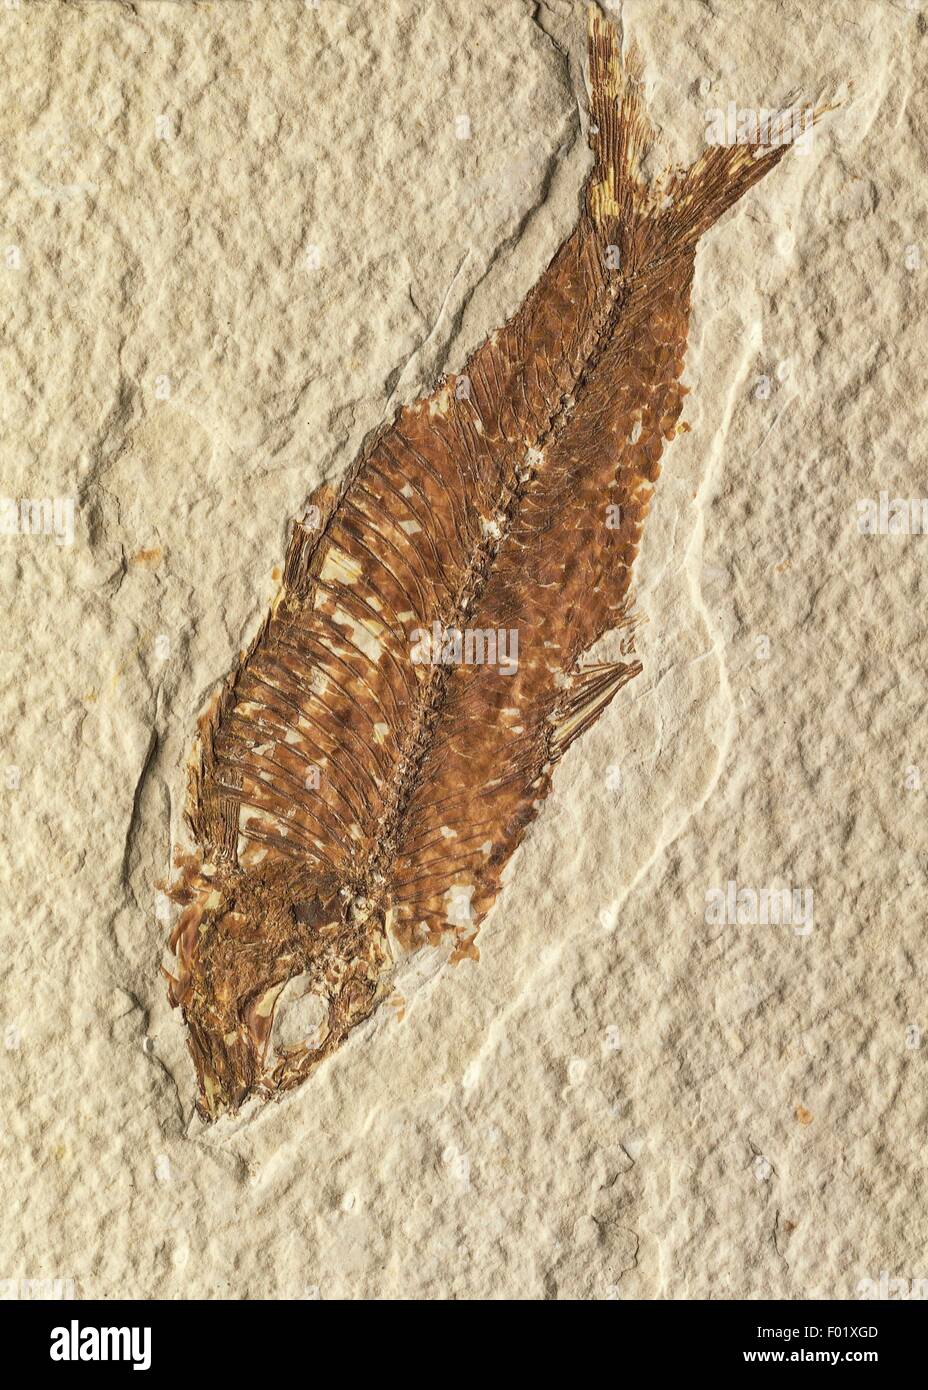 Fossils - Deuterostomia - Chordata - Actinopterygii - Mioplosus labracoides - Eocene - United States of America. Stock Photo